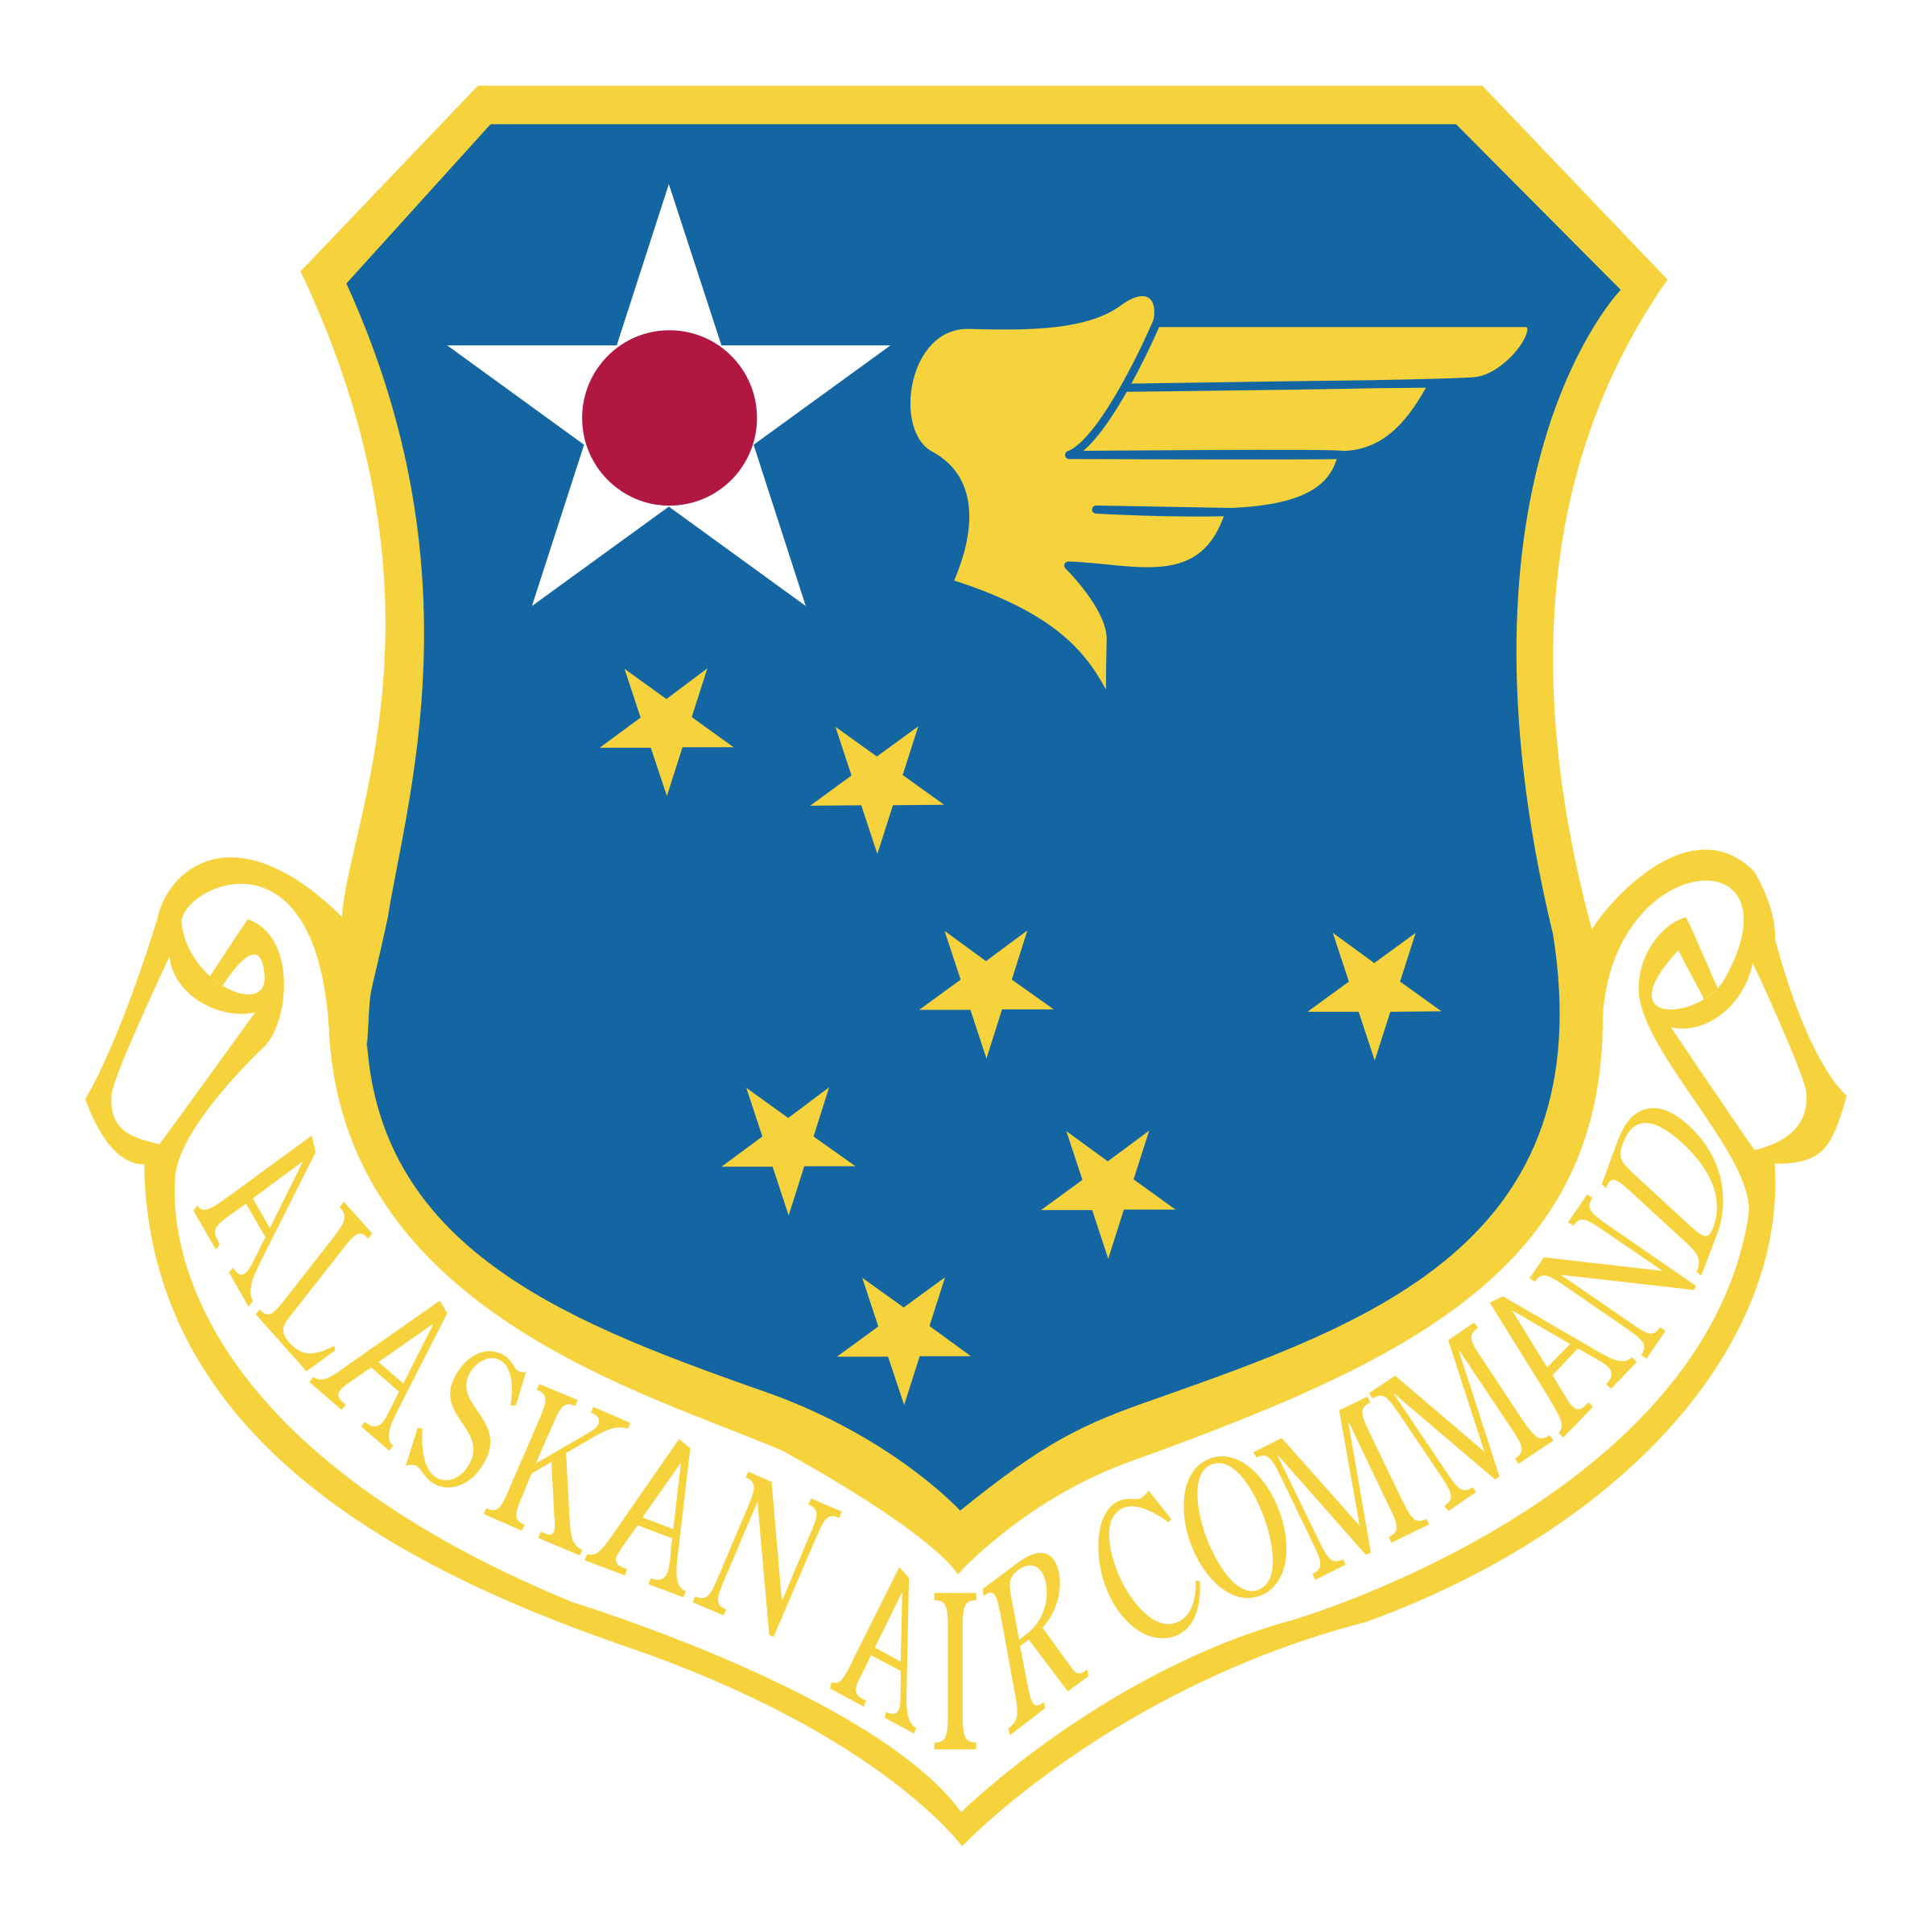 Alaskan Logo - Alaskan Air Command Logo PNG Transparent & SVG Vector - Freebie Supply